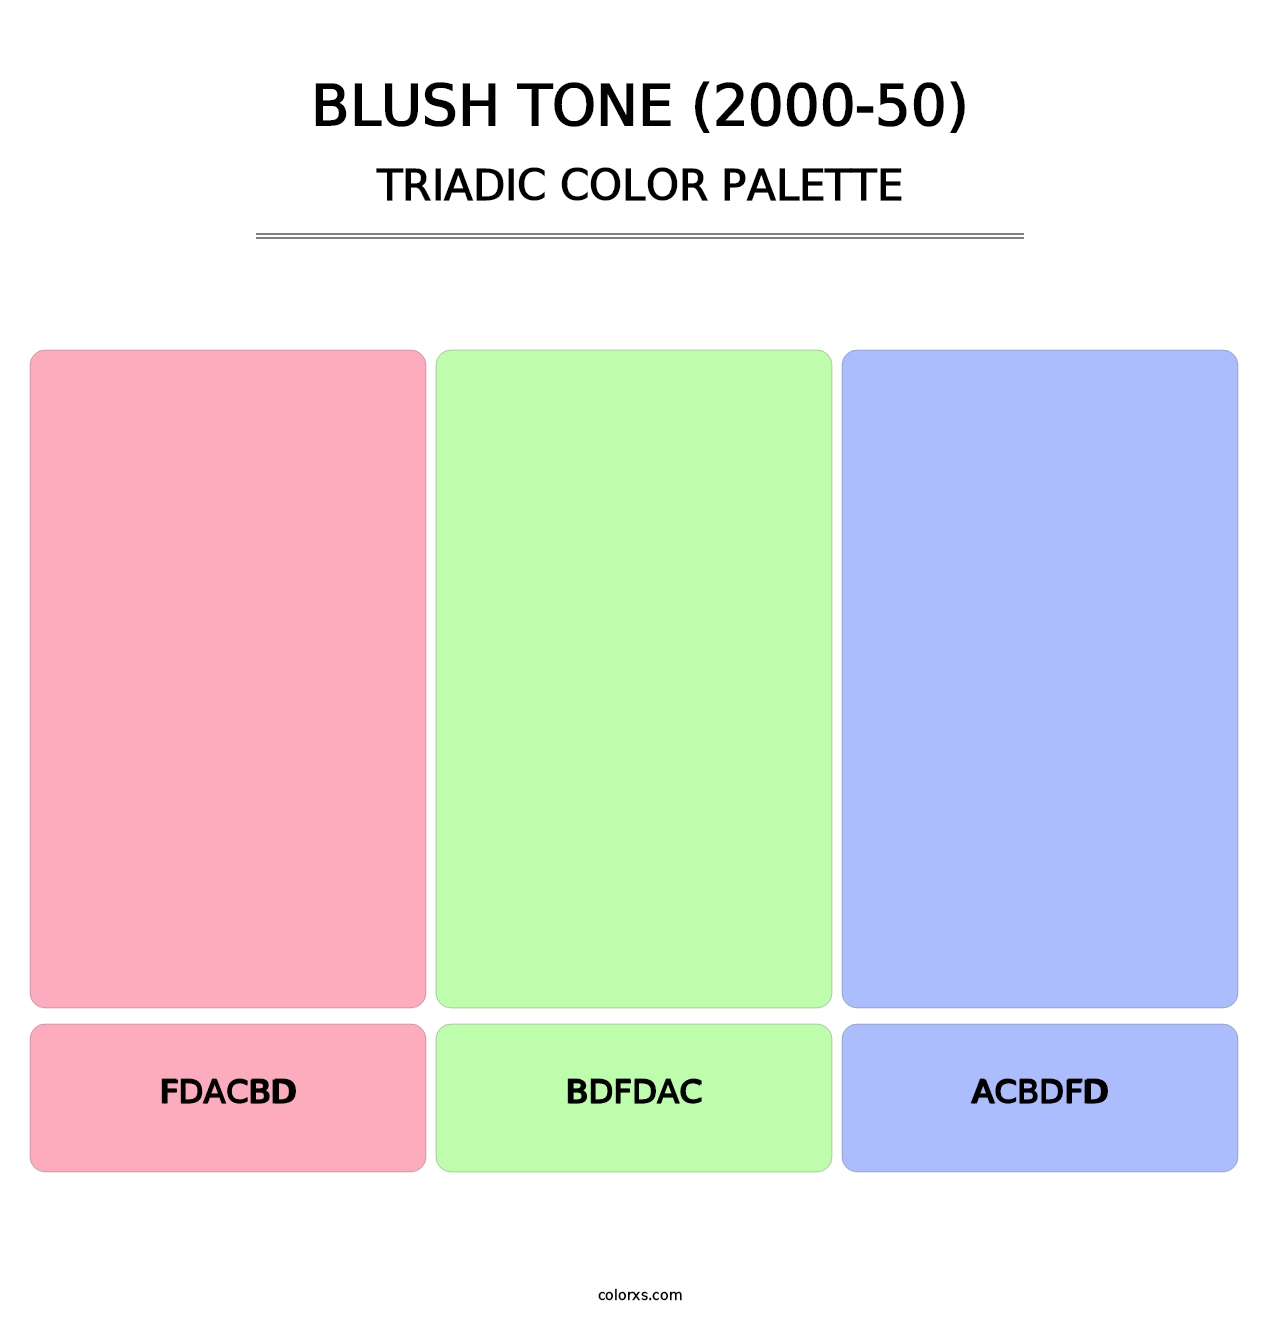 Blush Tone (2000-50) - Triadic Color Palette